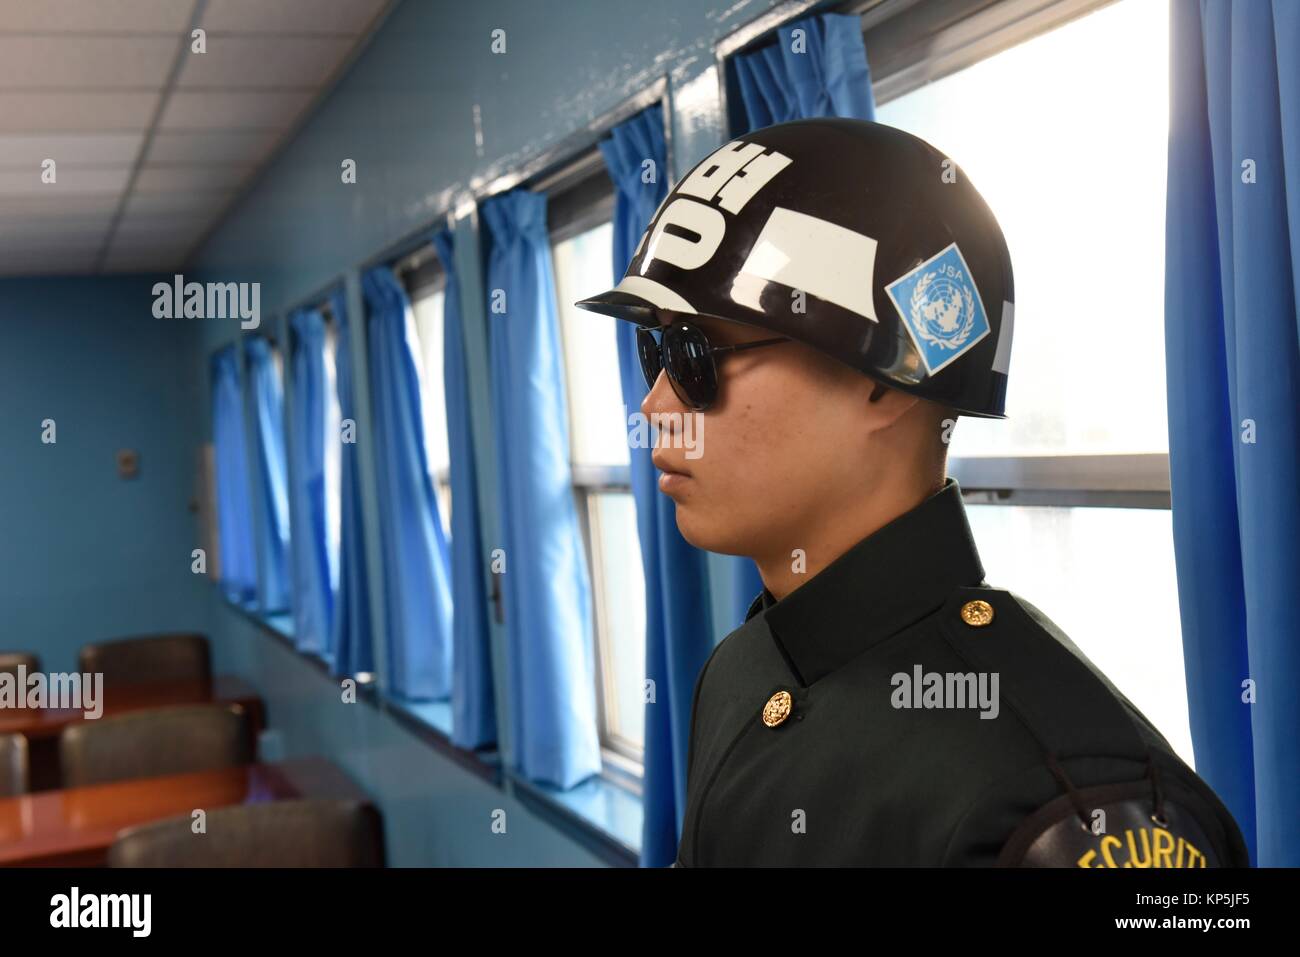 Border guard , DMZ demilitarized zone on the border of North and South Korea,Republic of Korea,Seoul,South Korea. Stock Photo